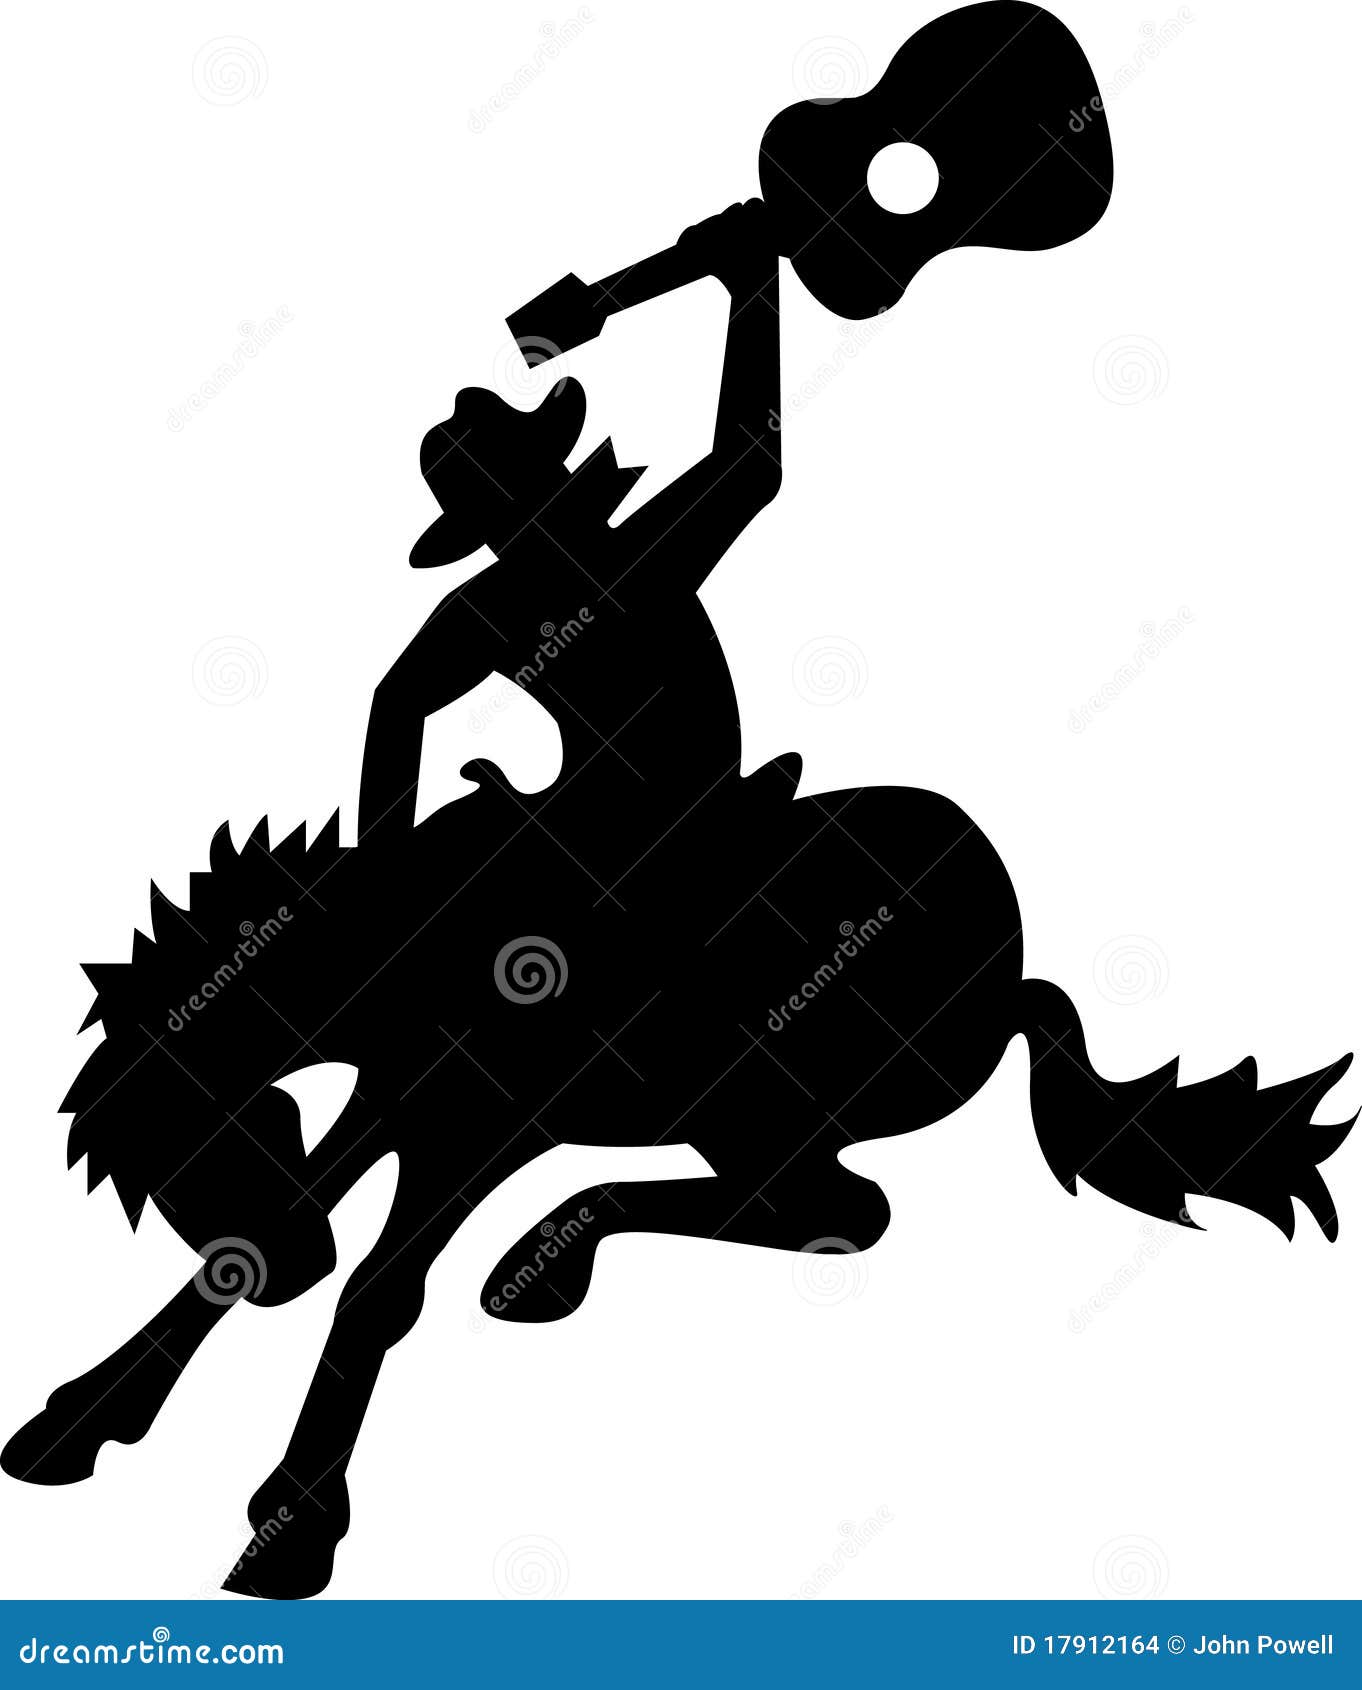 bronco riding cowboy sillhouette